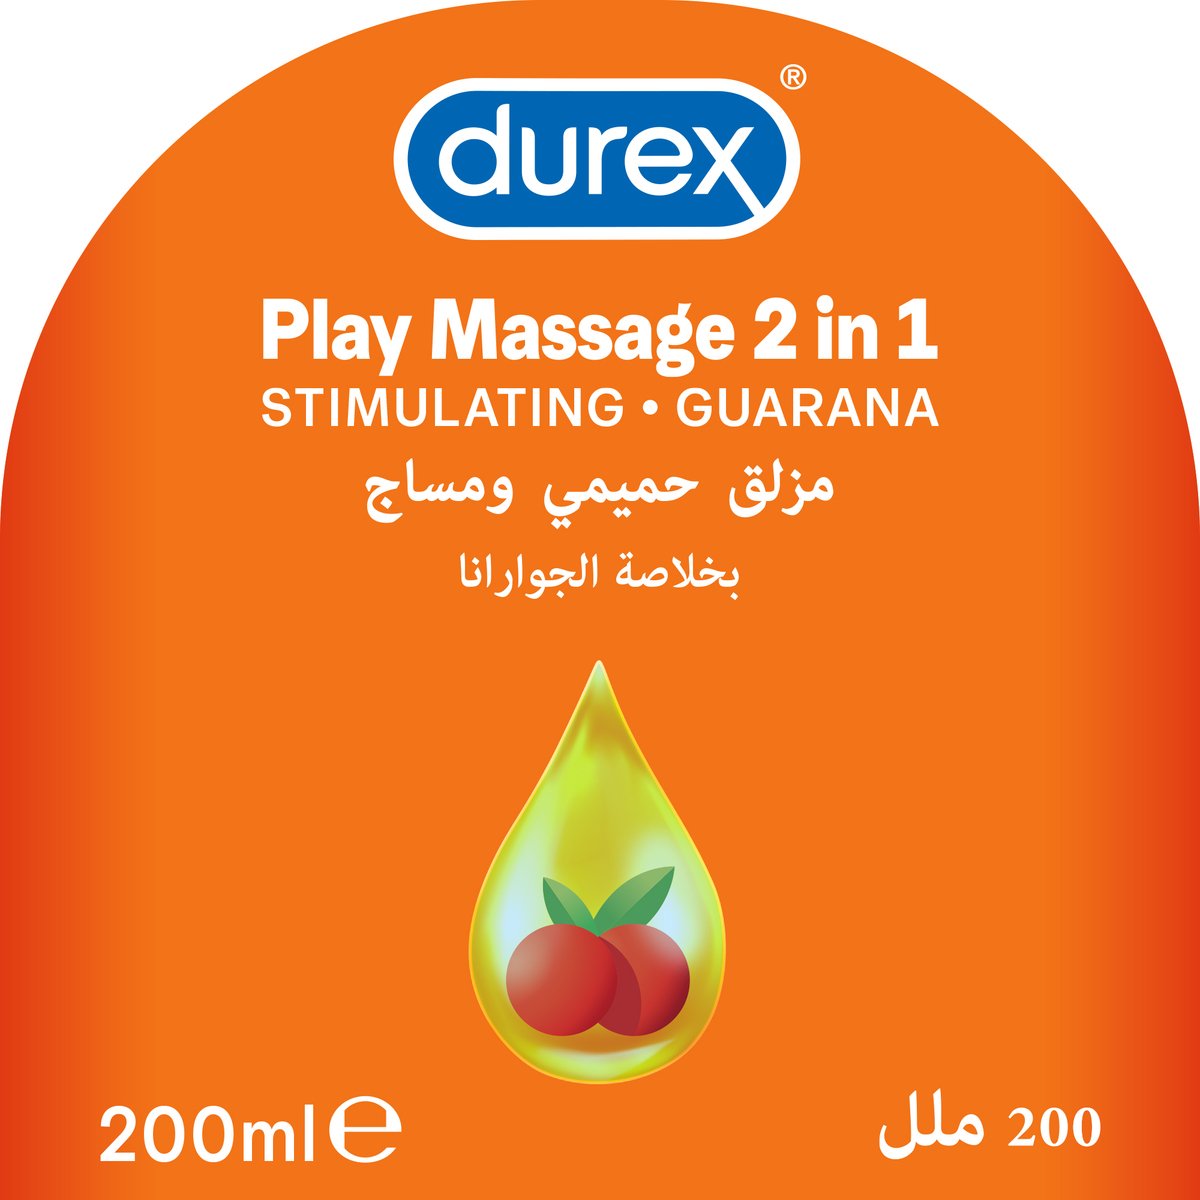 Durex Play Stimulating Massage 2in1 Lube Guarana 200 ml